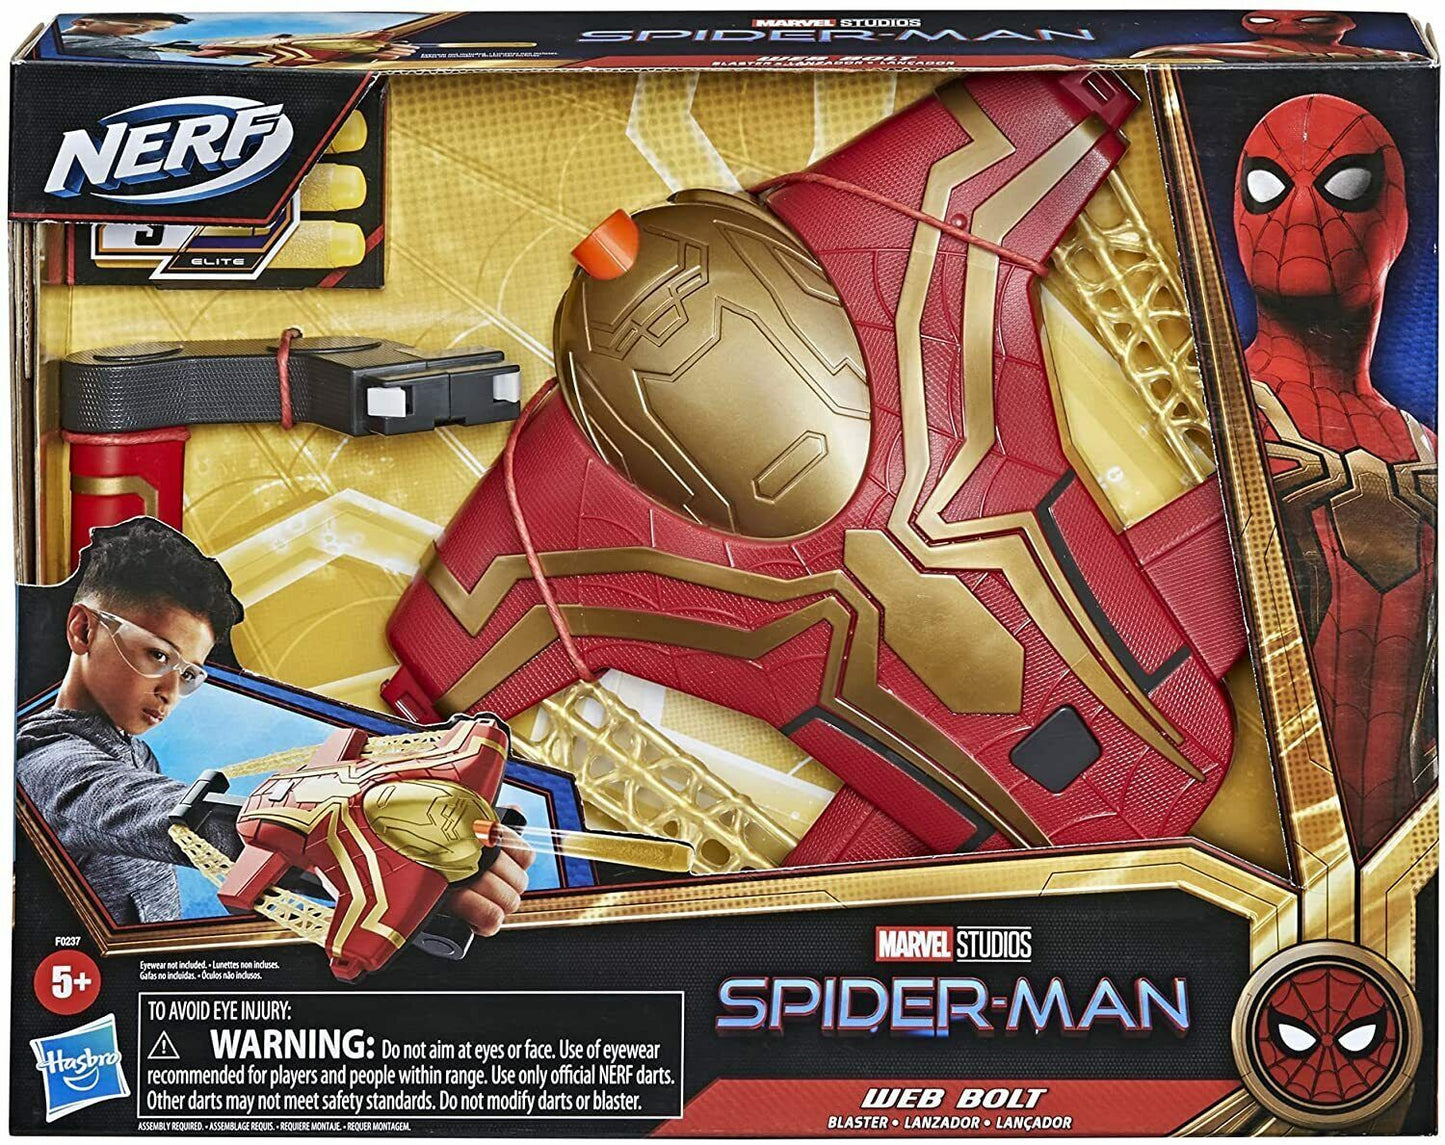 Spiderman Nerf Blaster